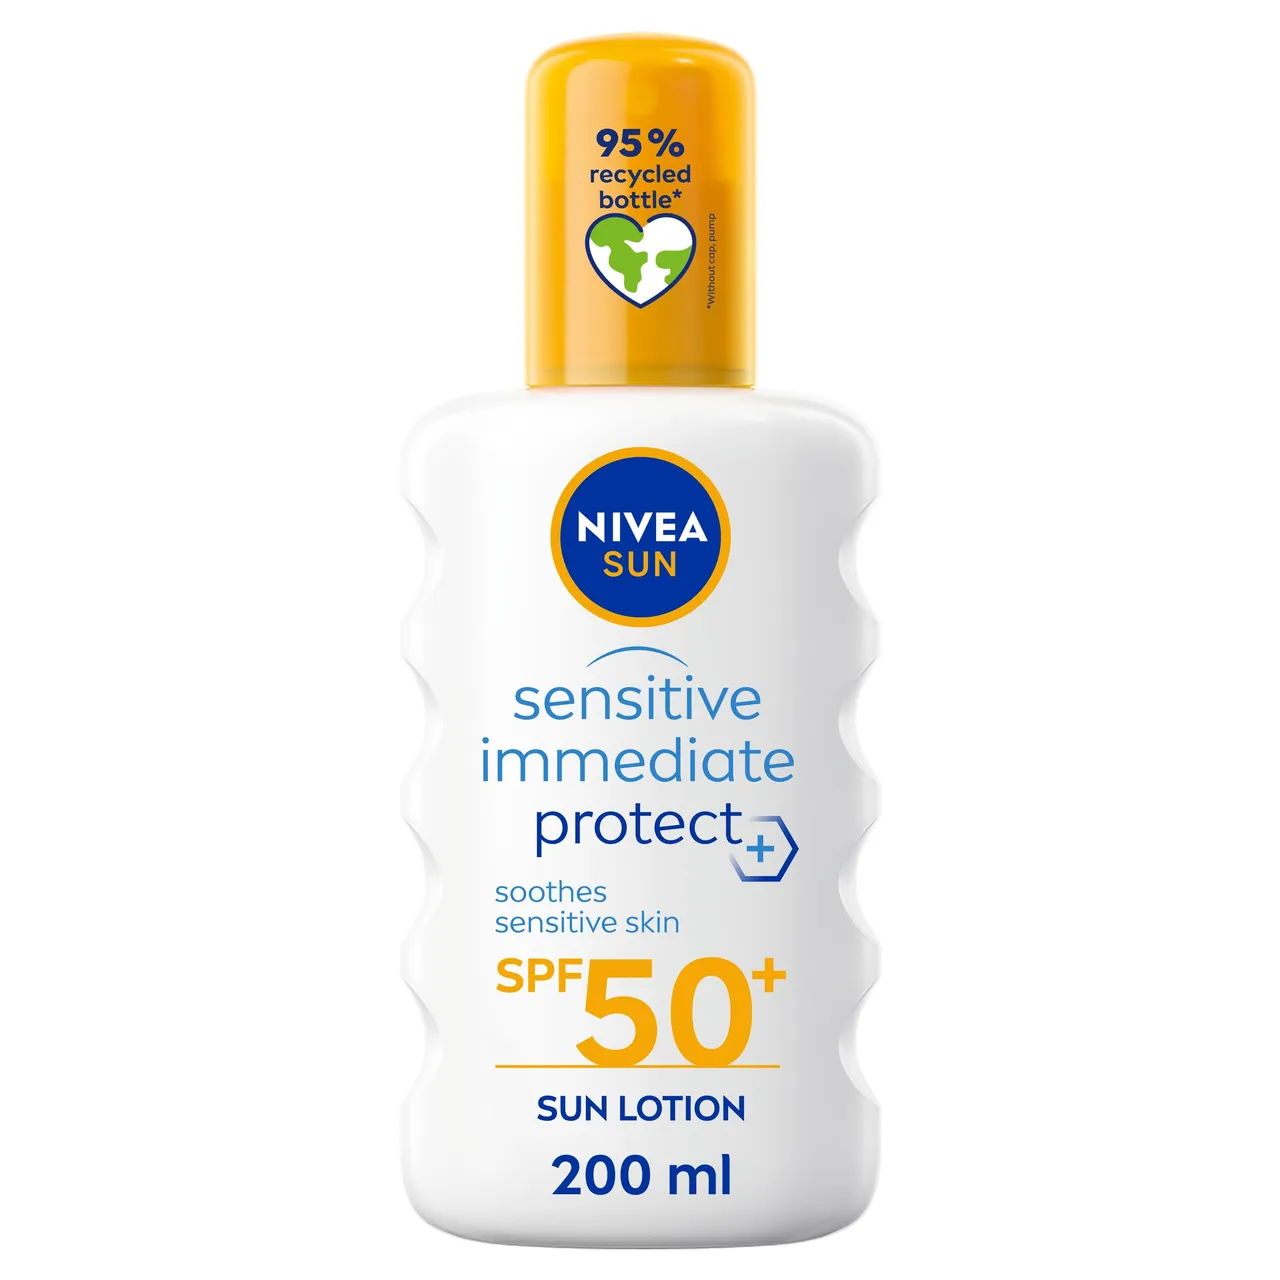 NIVEA SUN Protect and Sensitive Sun Spray (200 ml)